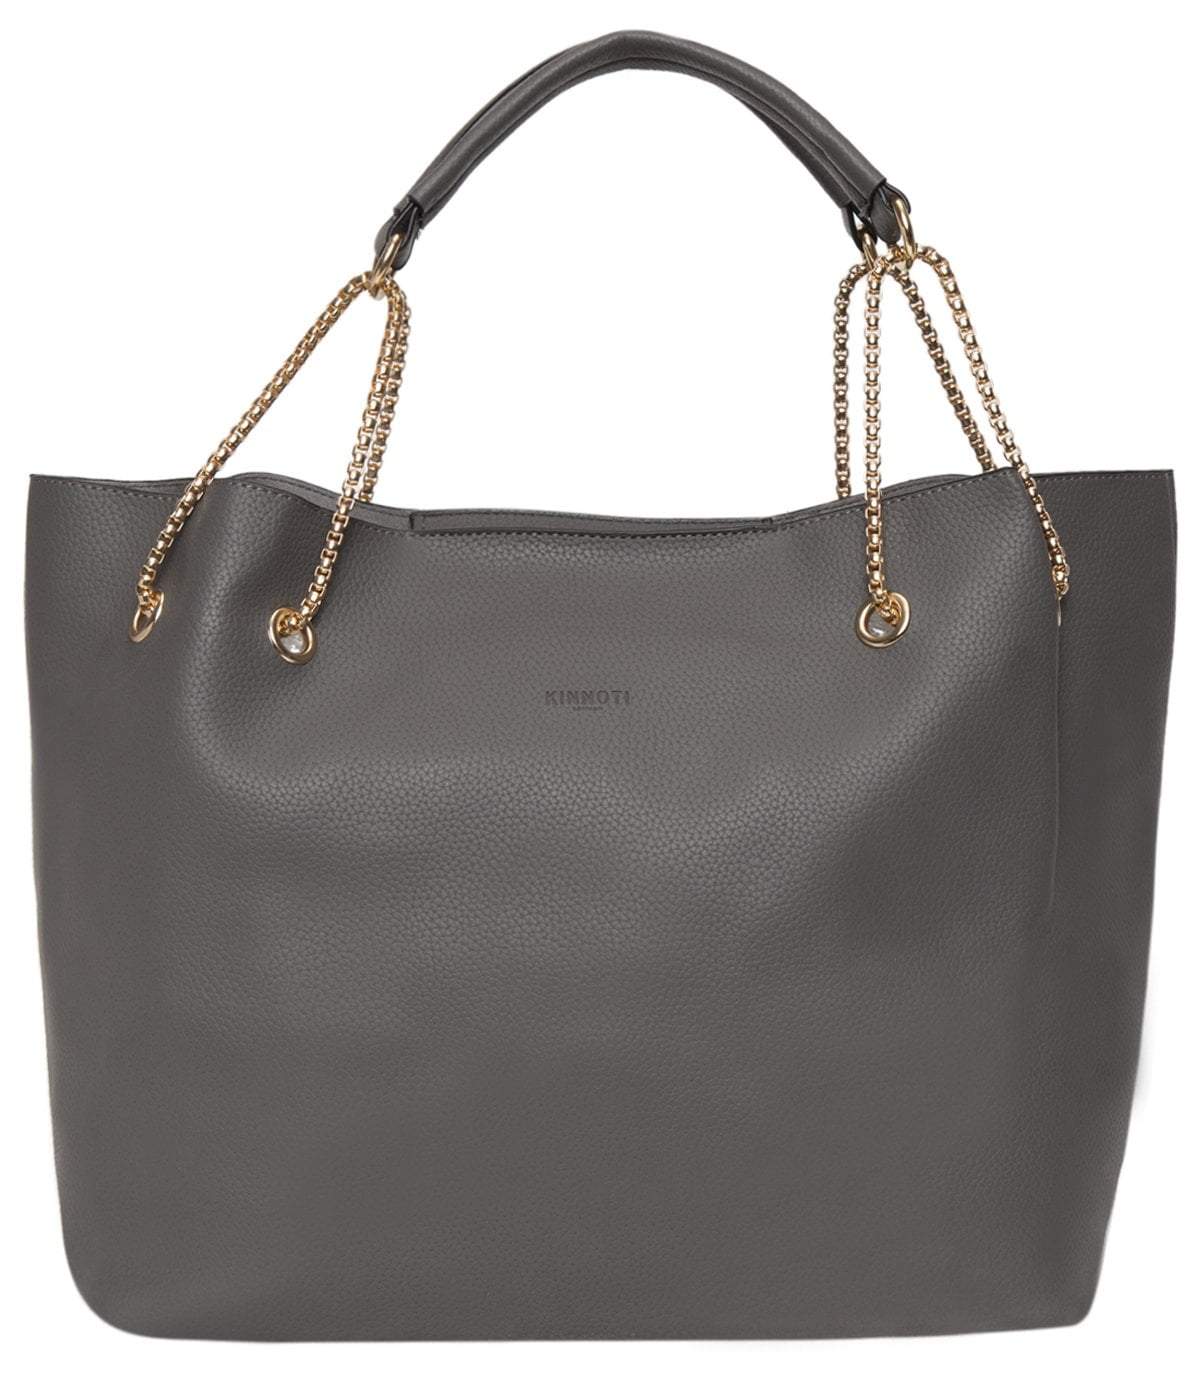 kinnoti Handbags Grey Black color Chain Tote Bag